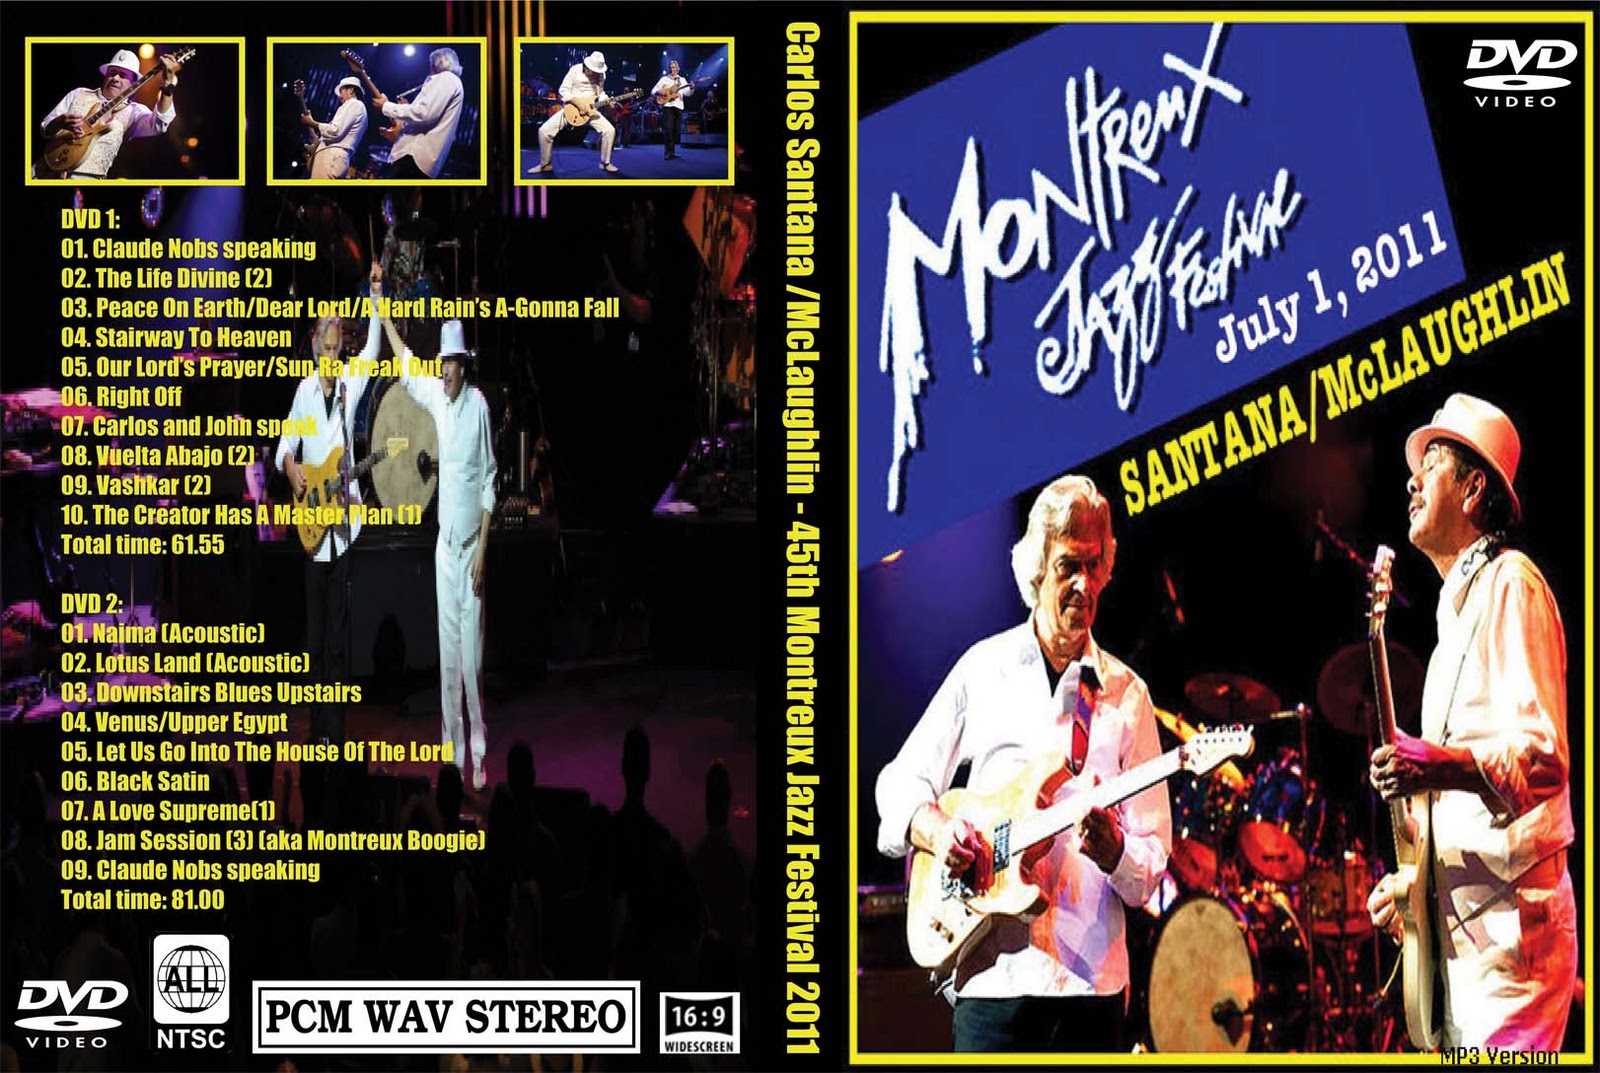 http://3.bp.blogspot.com/-5vGE7rR1kVA/Tox29yOxIjI/AAAAAAAAD7M/88LQF29nQ2I/s1600/DVD+Cover+Low+Quality+-+Carlos+Santana+-+John+McLaughlin+Montreux+1+July+2011.jpg